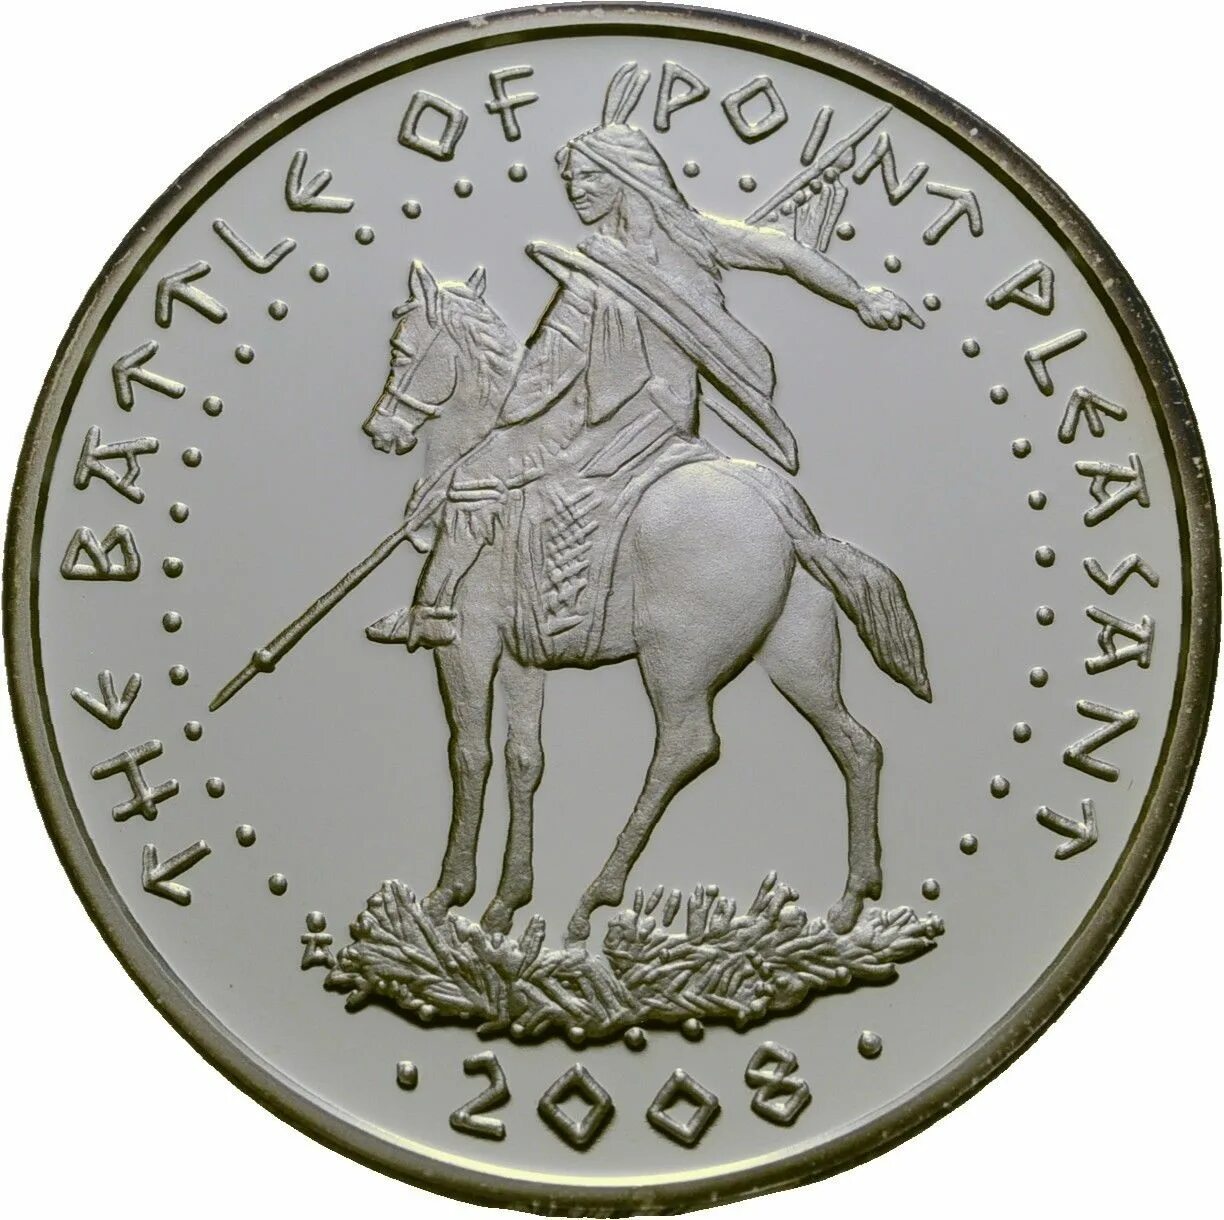 Монета племени Шу. 50 Пойнт монета. 1доллар2009серебро племя индейцев Шауни. Старинные монеты из племени индейцев.